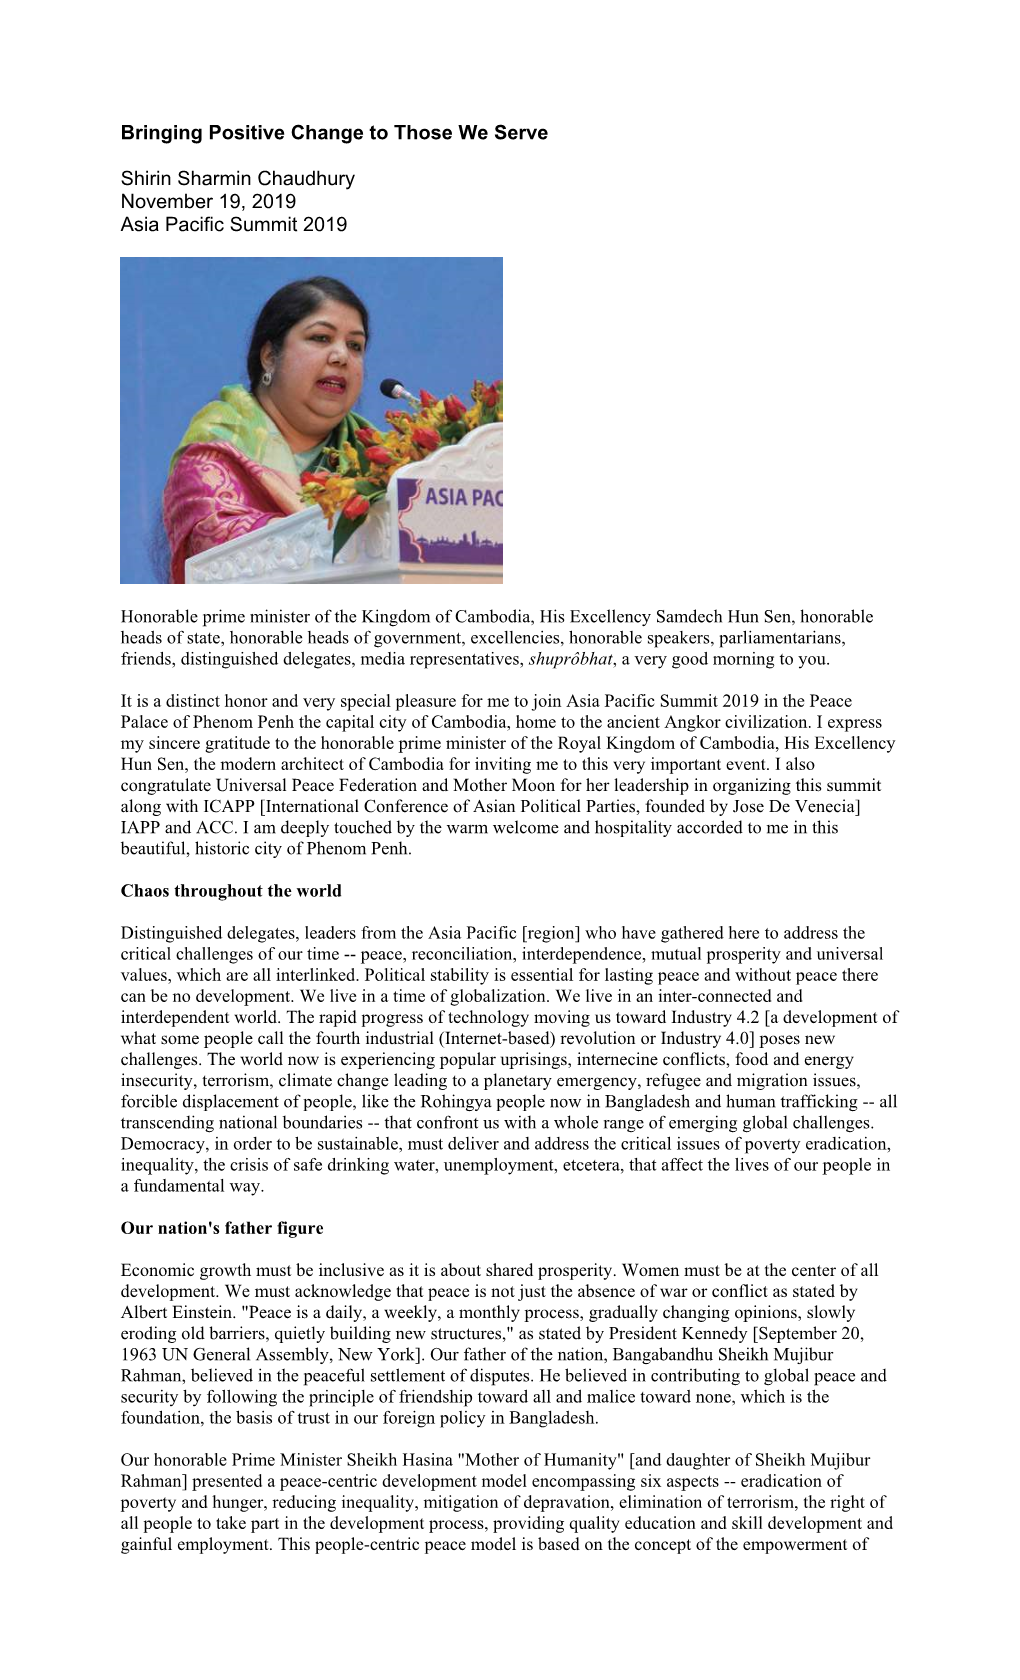 Shirin Sharmin Chaudhury November 19, 2019 Asia Pacific Summit 2019